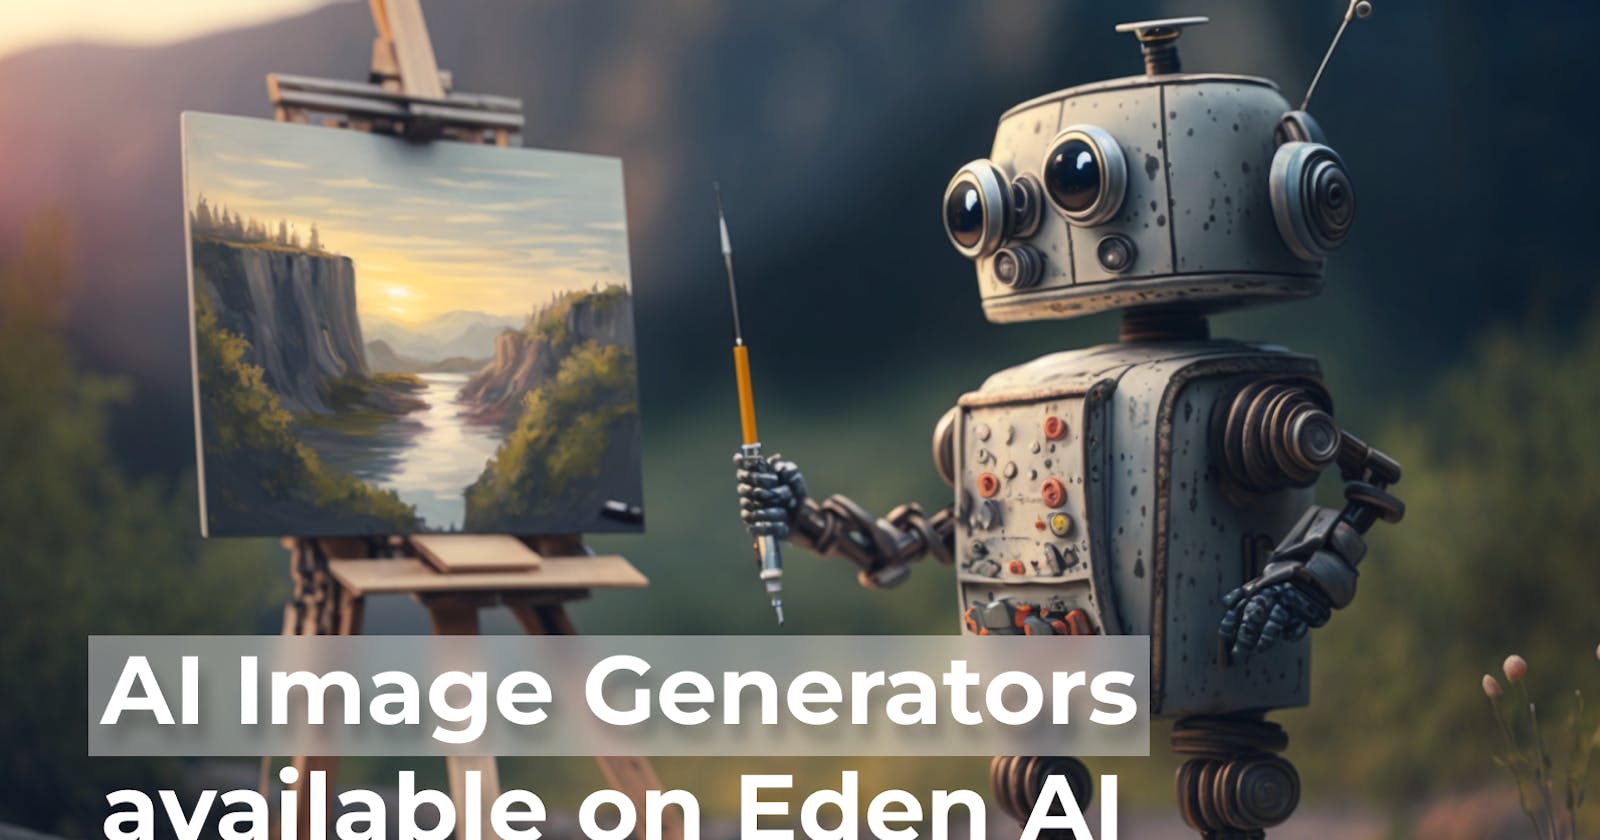 NEW: AI Image Generators available on Eden AI